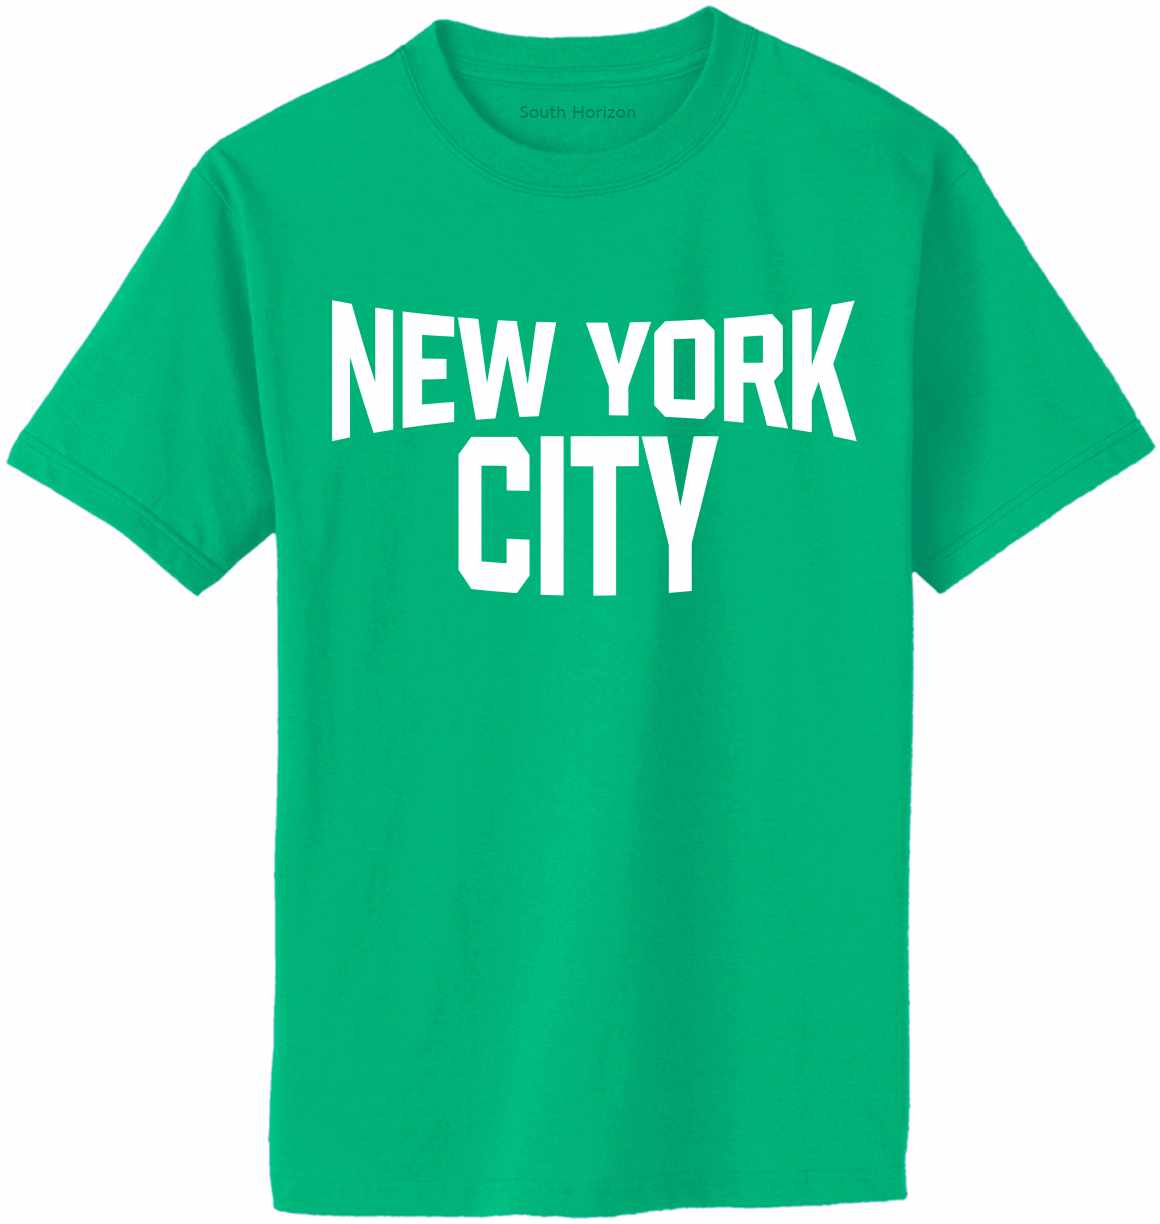 New York City on Adult T-Shirt